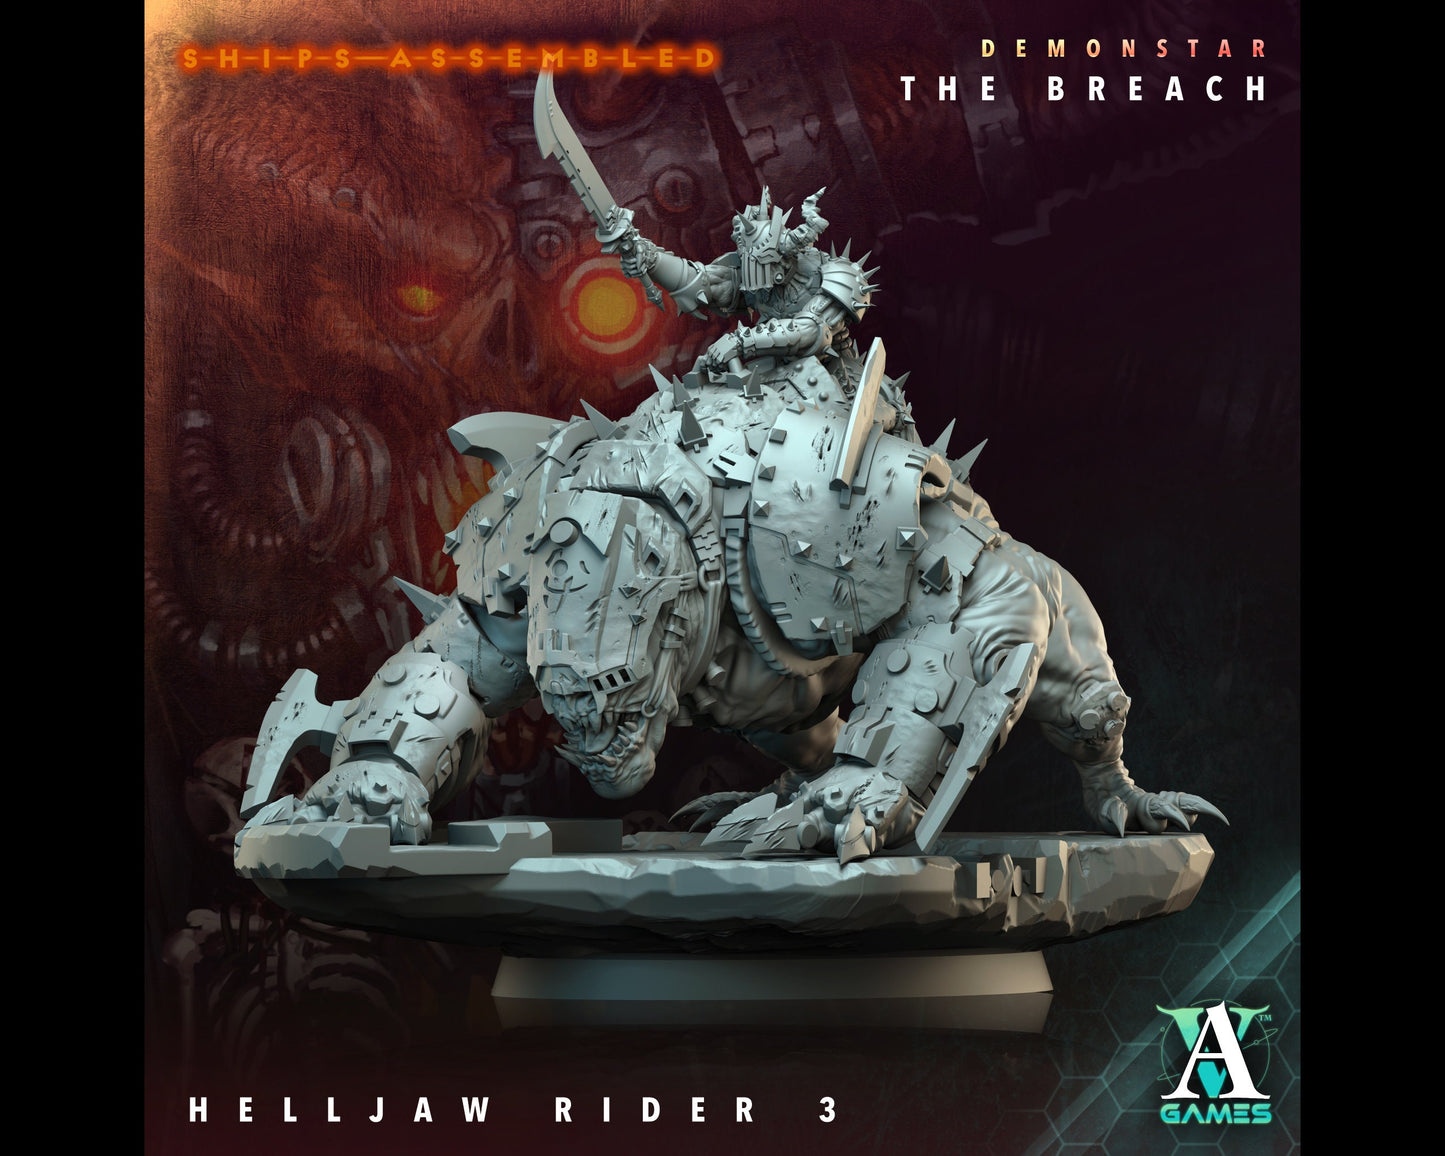 Helljaw Rider 3 - Demonstar: The Breach - Highly Detailed Resin 8k 3D Printed Miniature